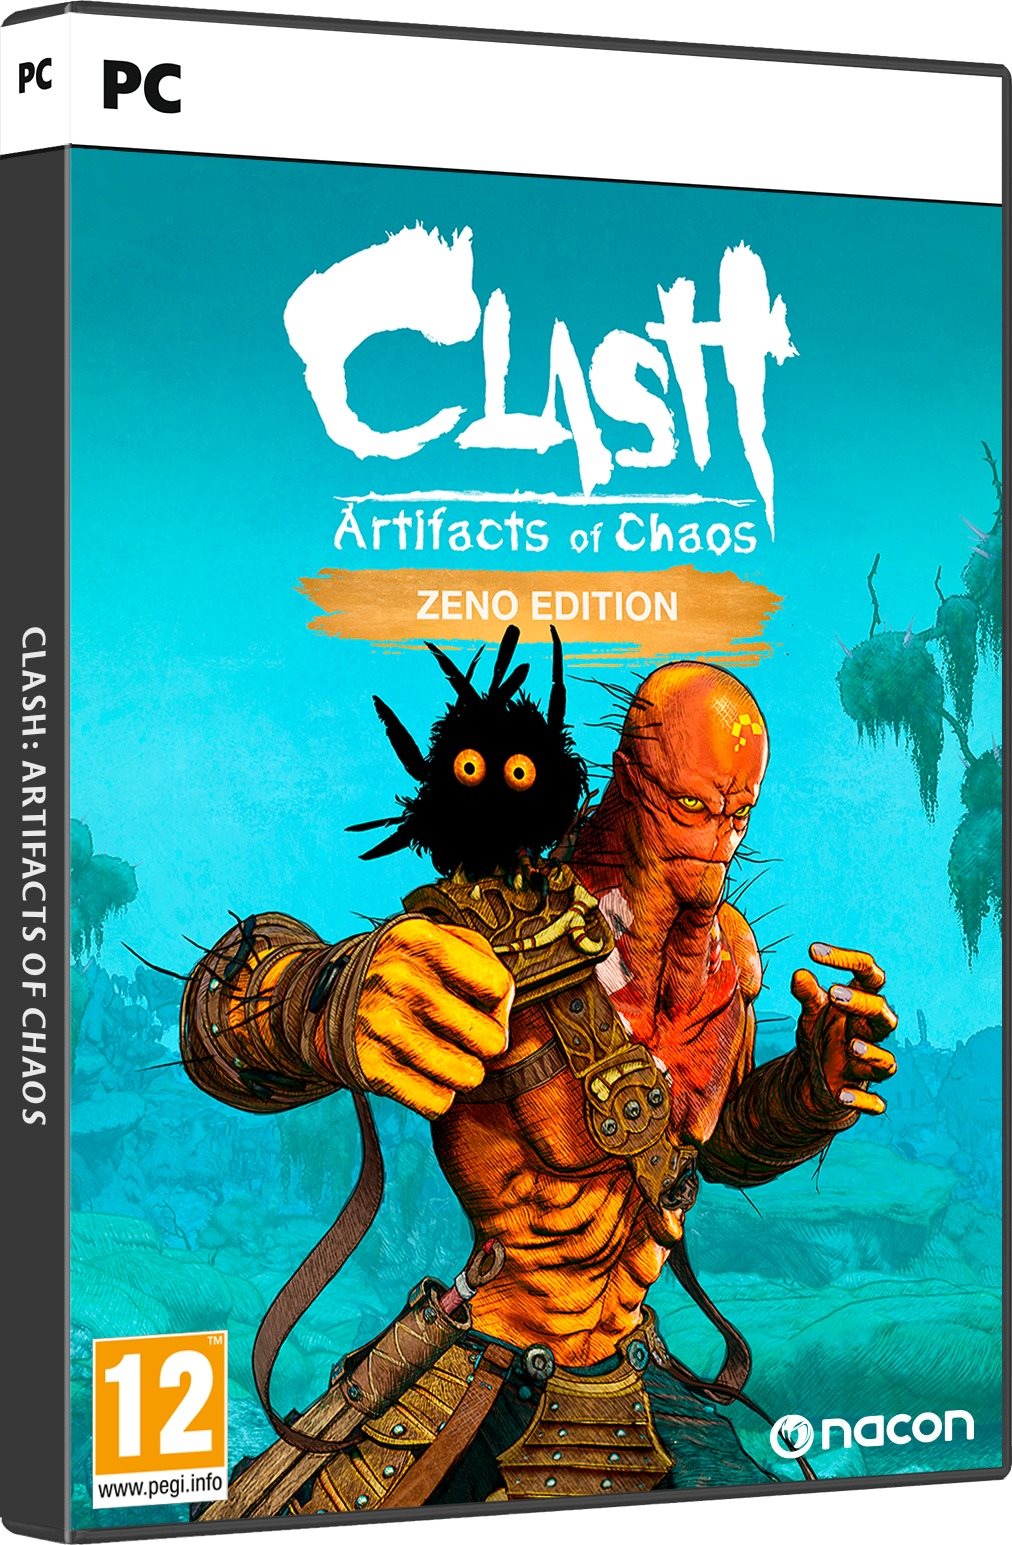 PC játék Clash: Artifacts of Chaos Zeno Edition